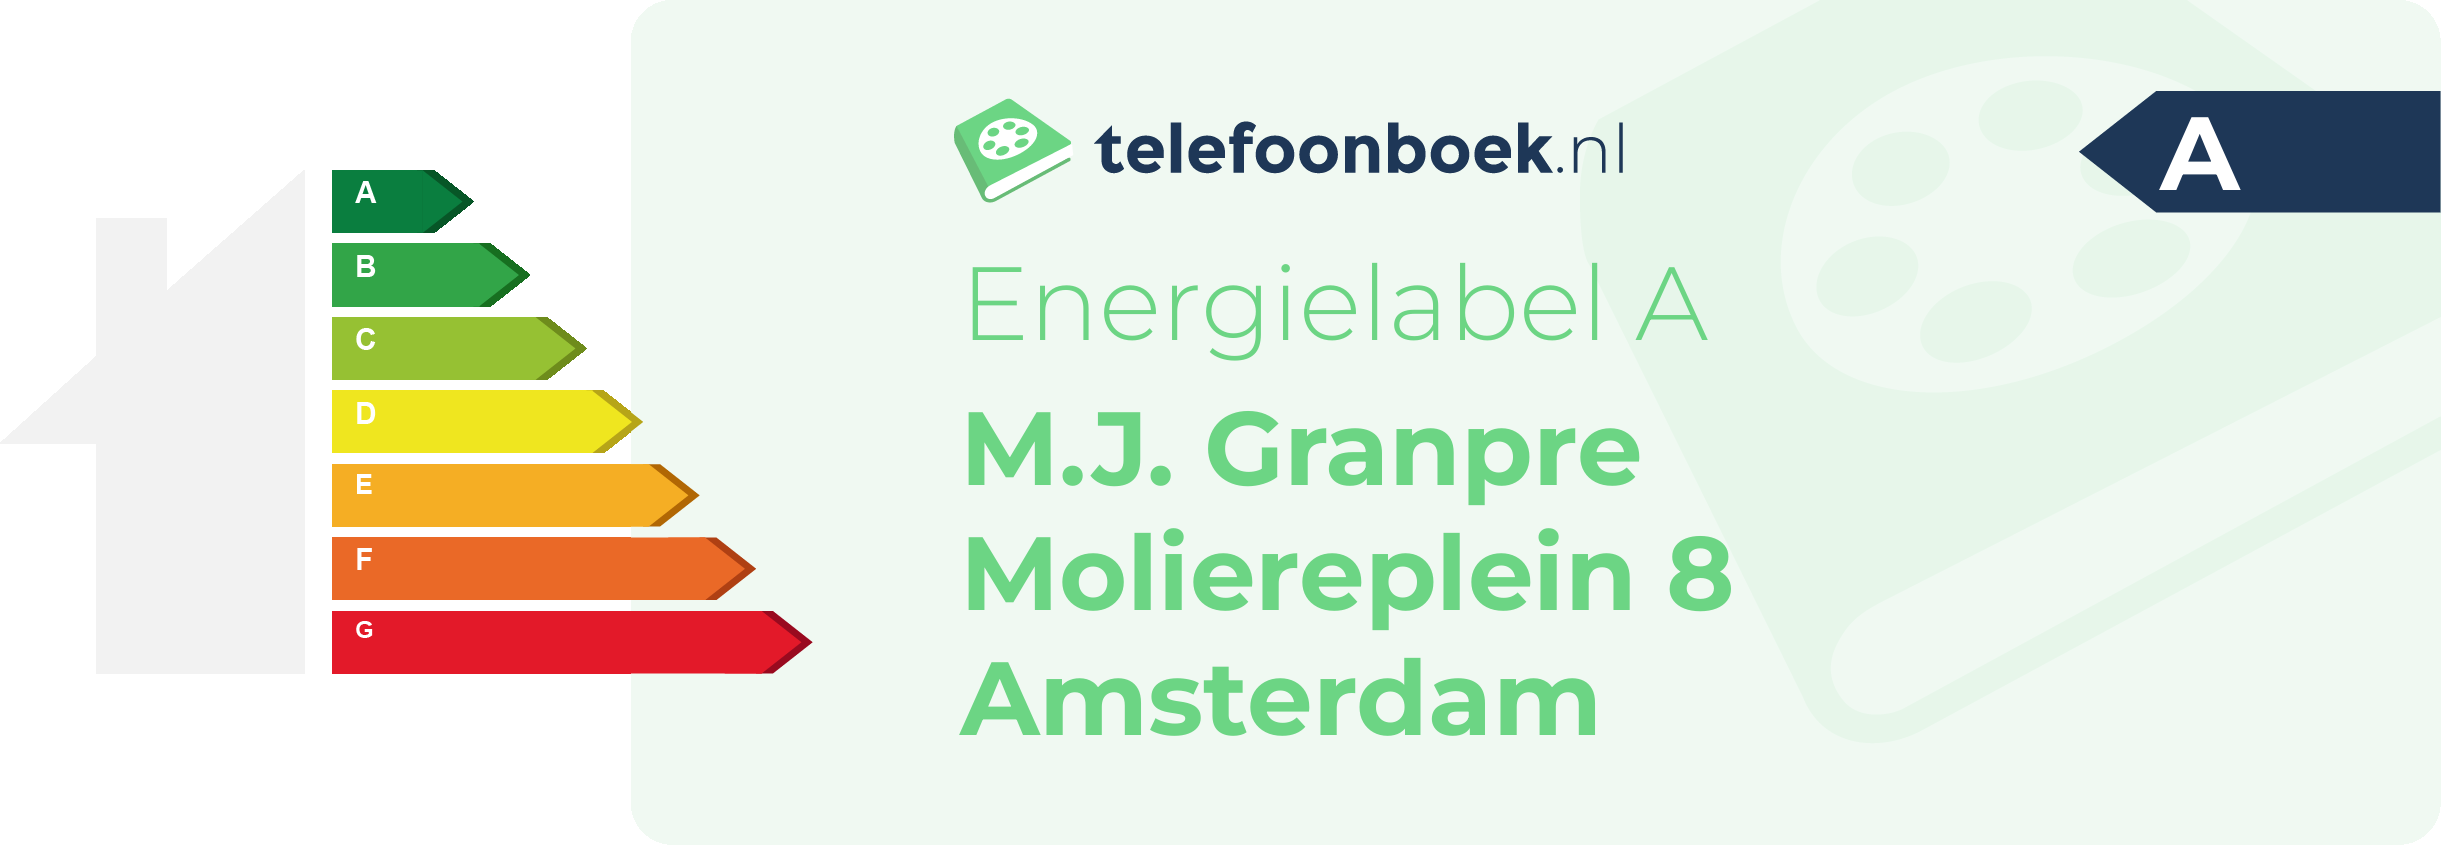 Energielabel M.J. Granpre Moliereplein 8 Amsterdam